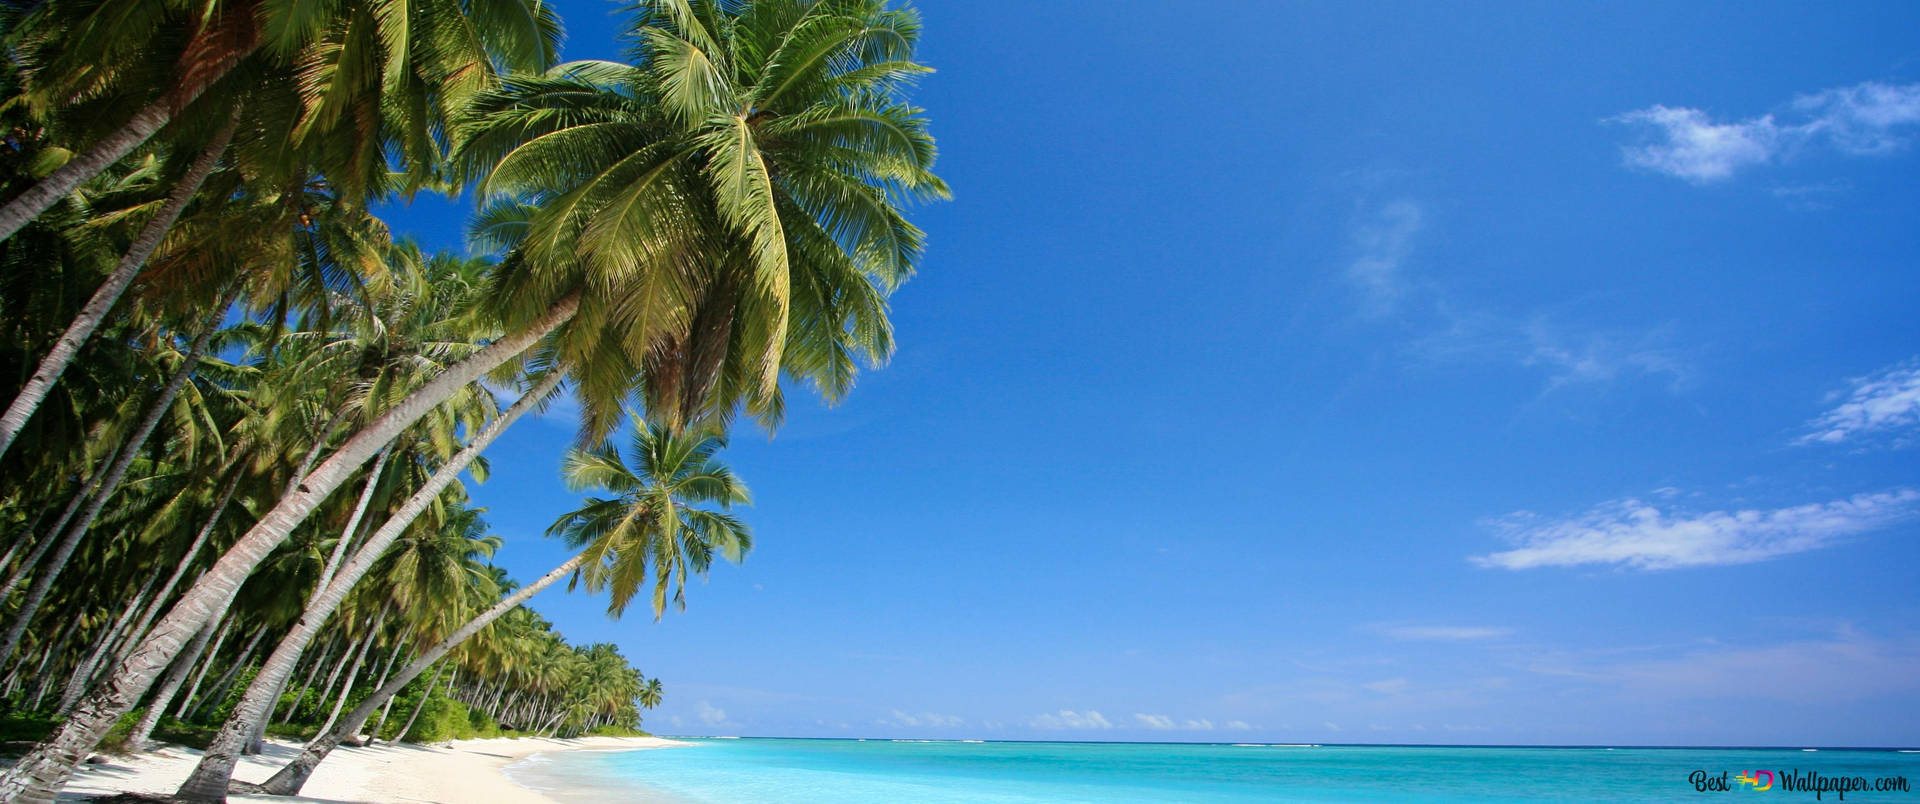 Florida Beach Coconut Trees And Sky Wallpaper